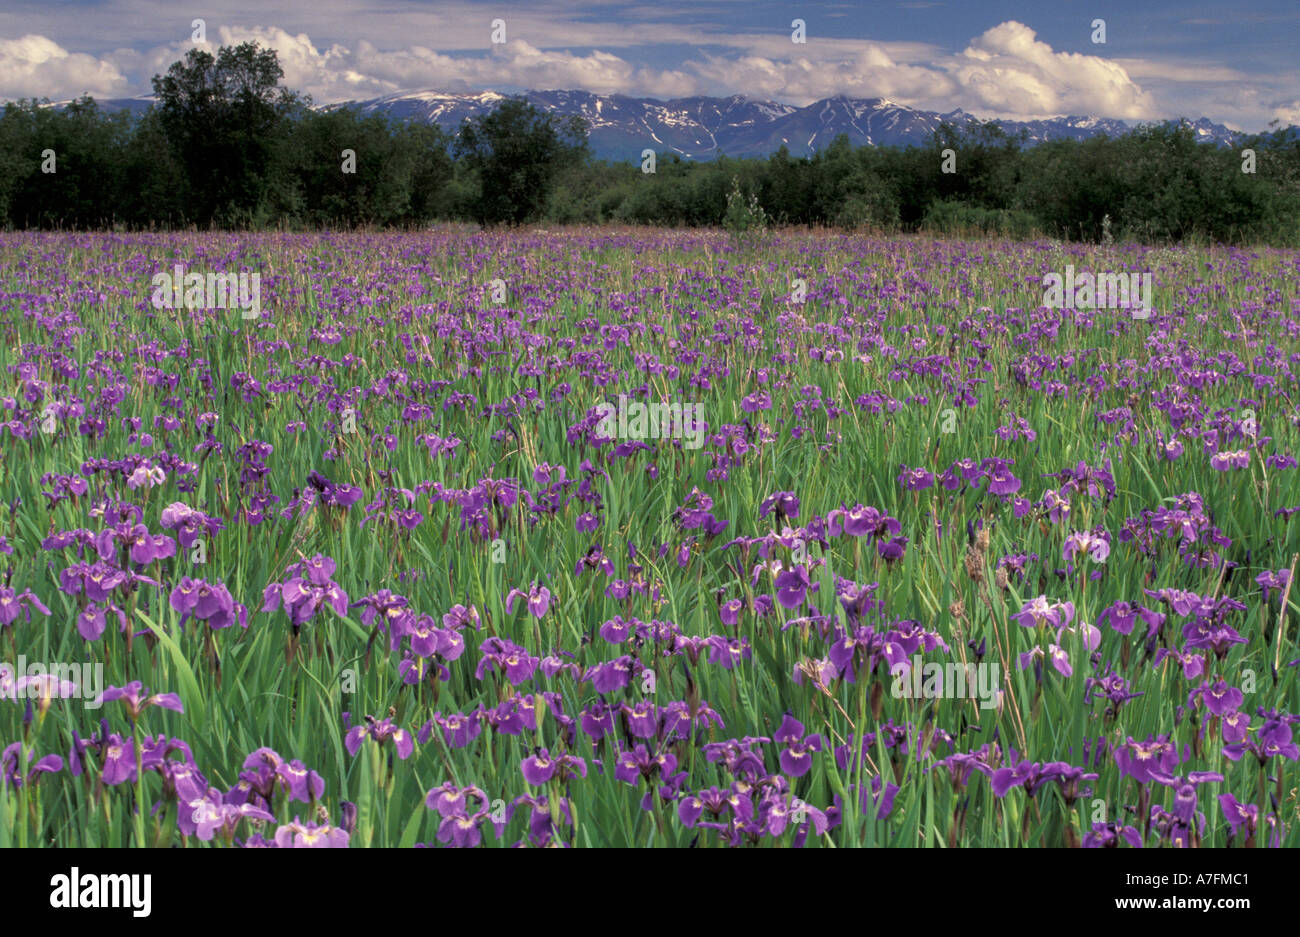 North America, USA, Alaska, Anchorage, Eklutna Flats, Iris flowers (Iris setosa) Stock Photo